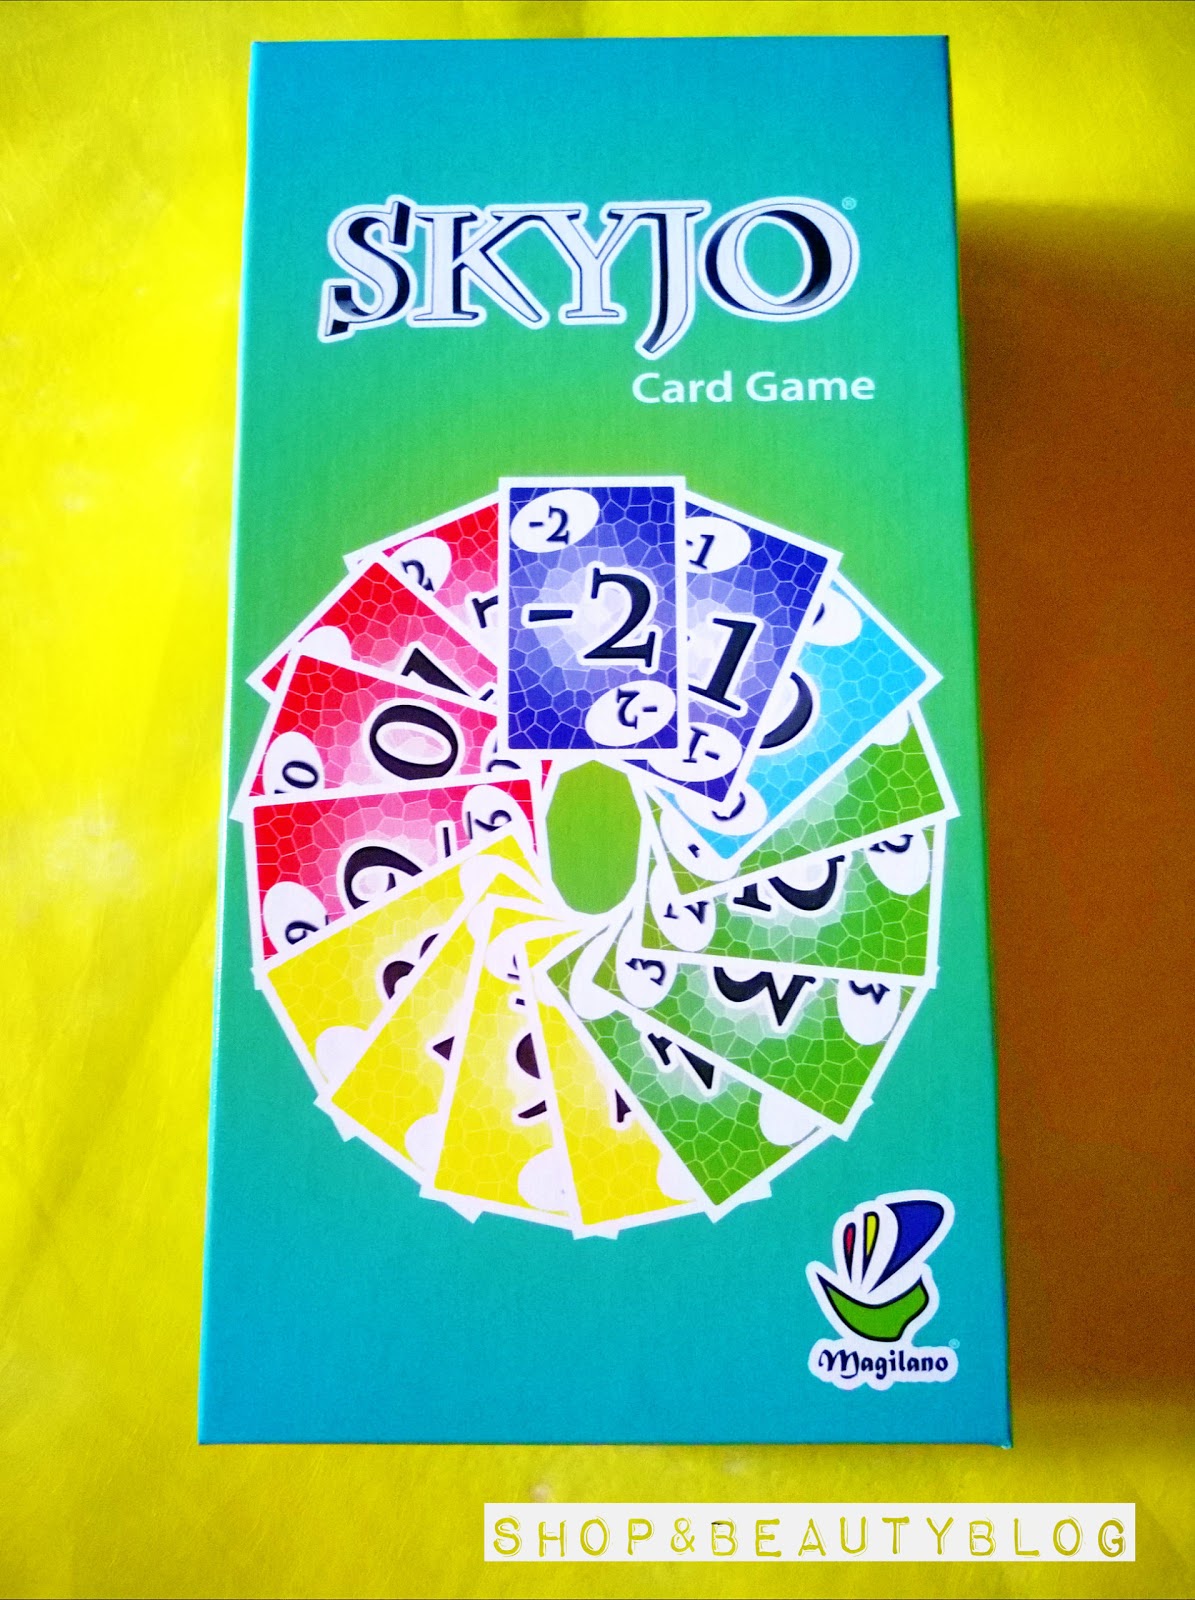 Tester Shop&BeautyBlog: Skyjo il Nuovo ed entusiasmante Card Game di  Magilano, 5 stelle  !!